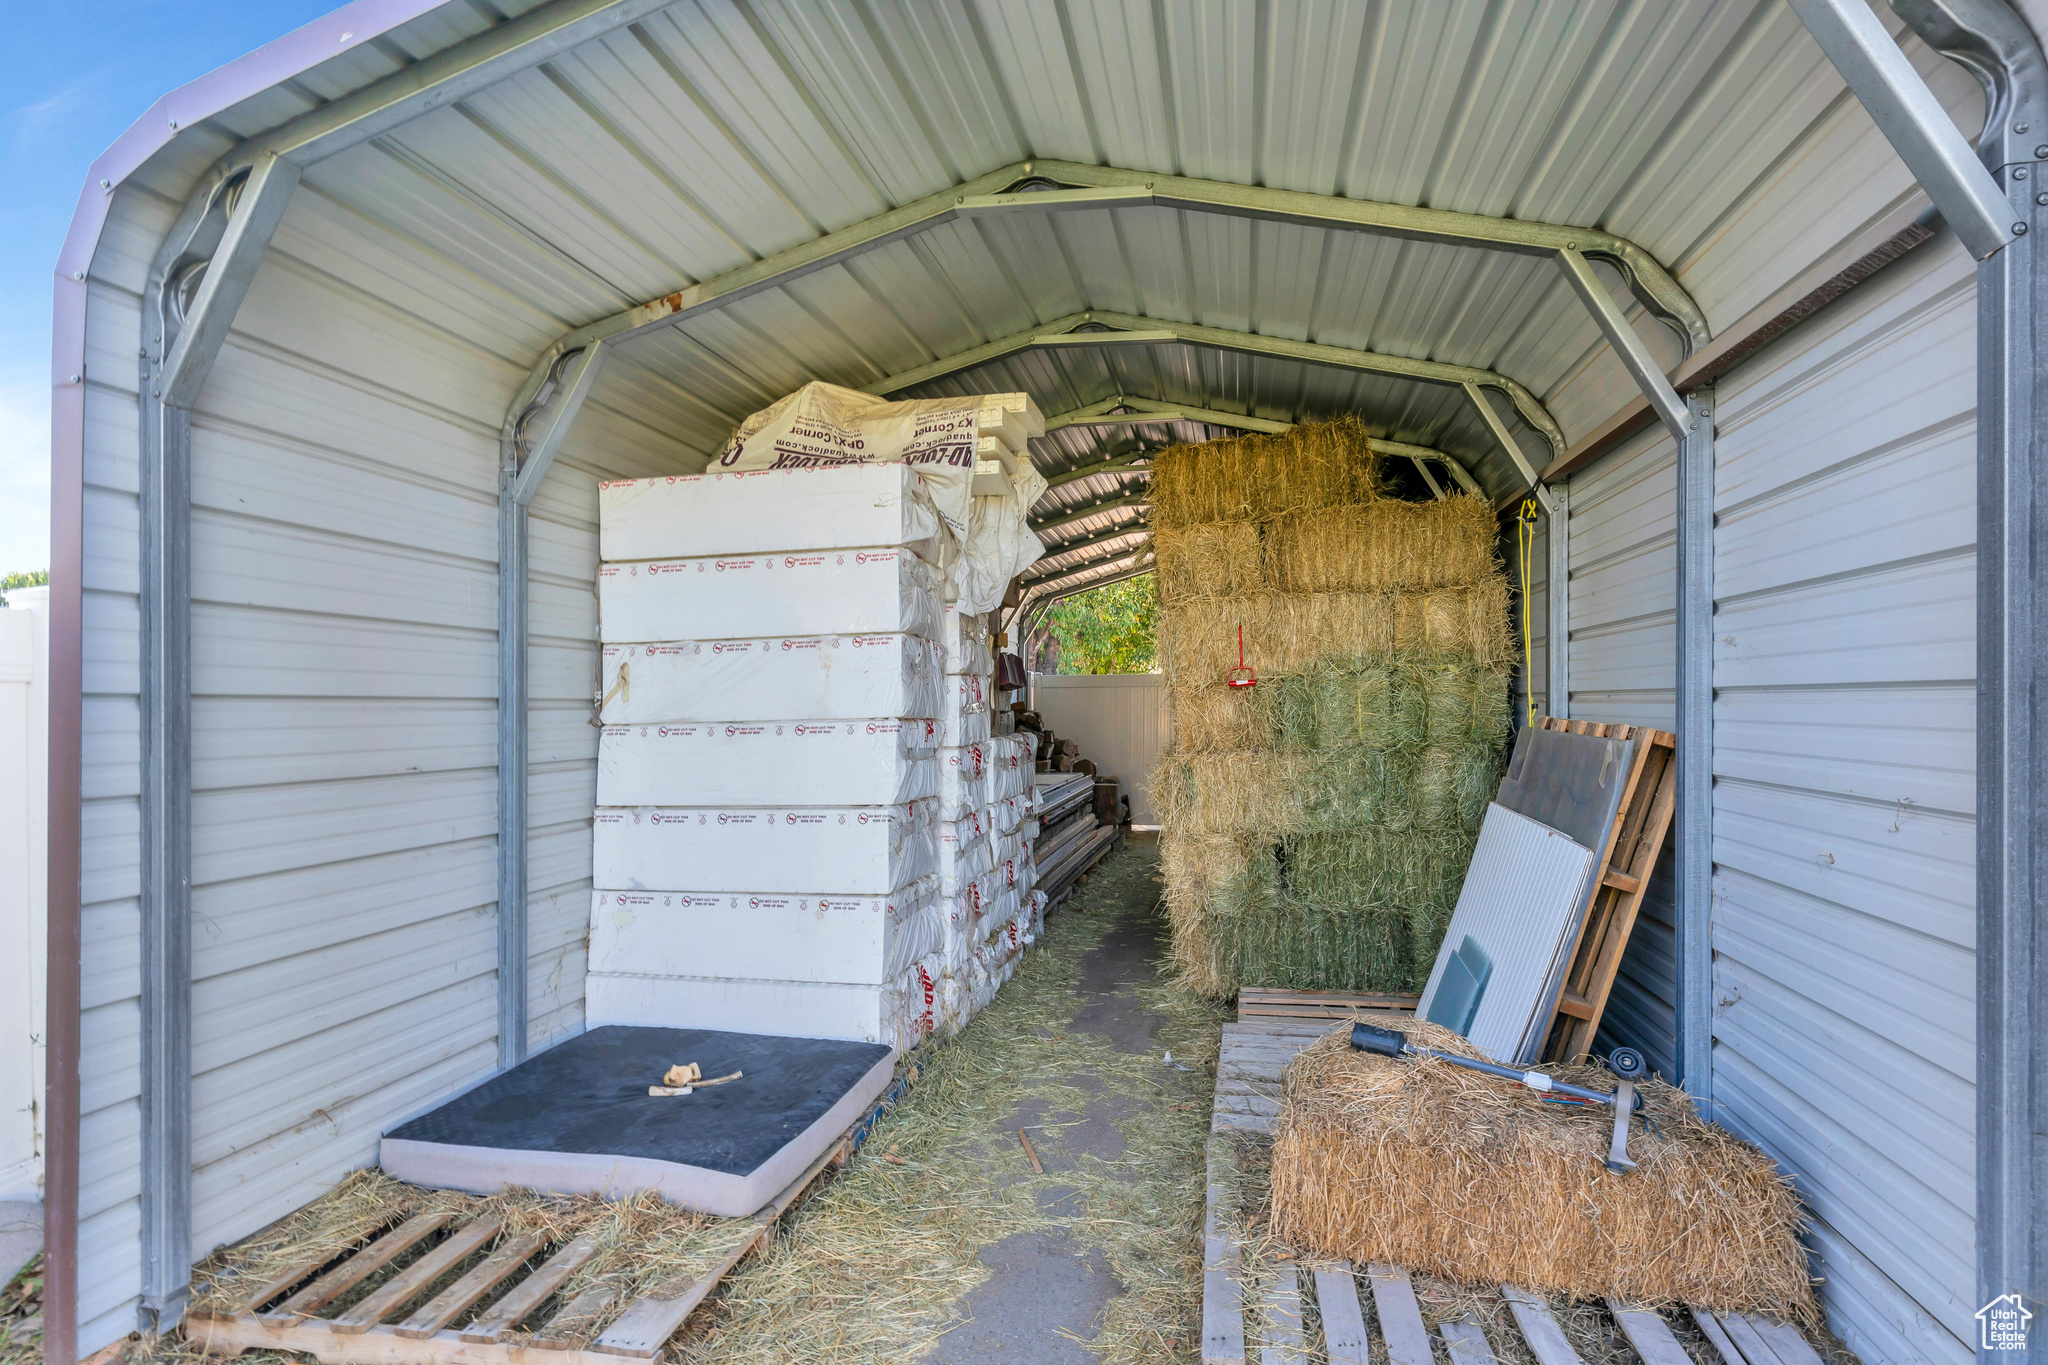 Covered storage carport